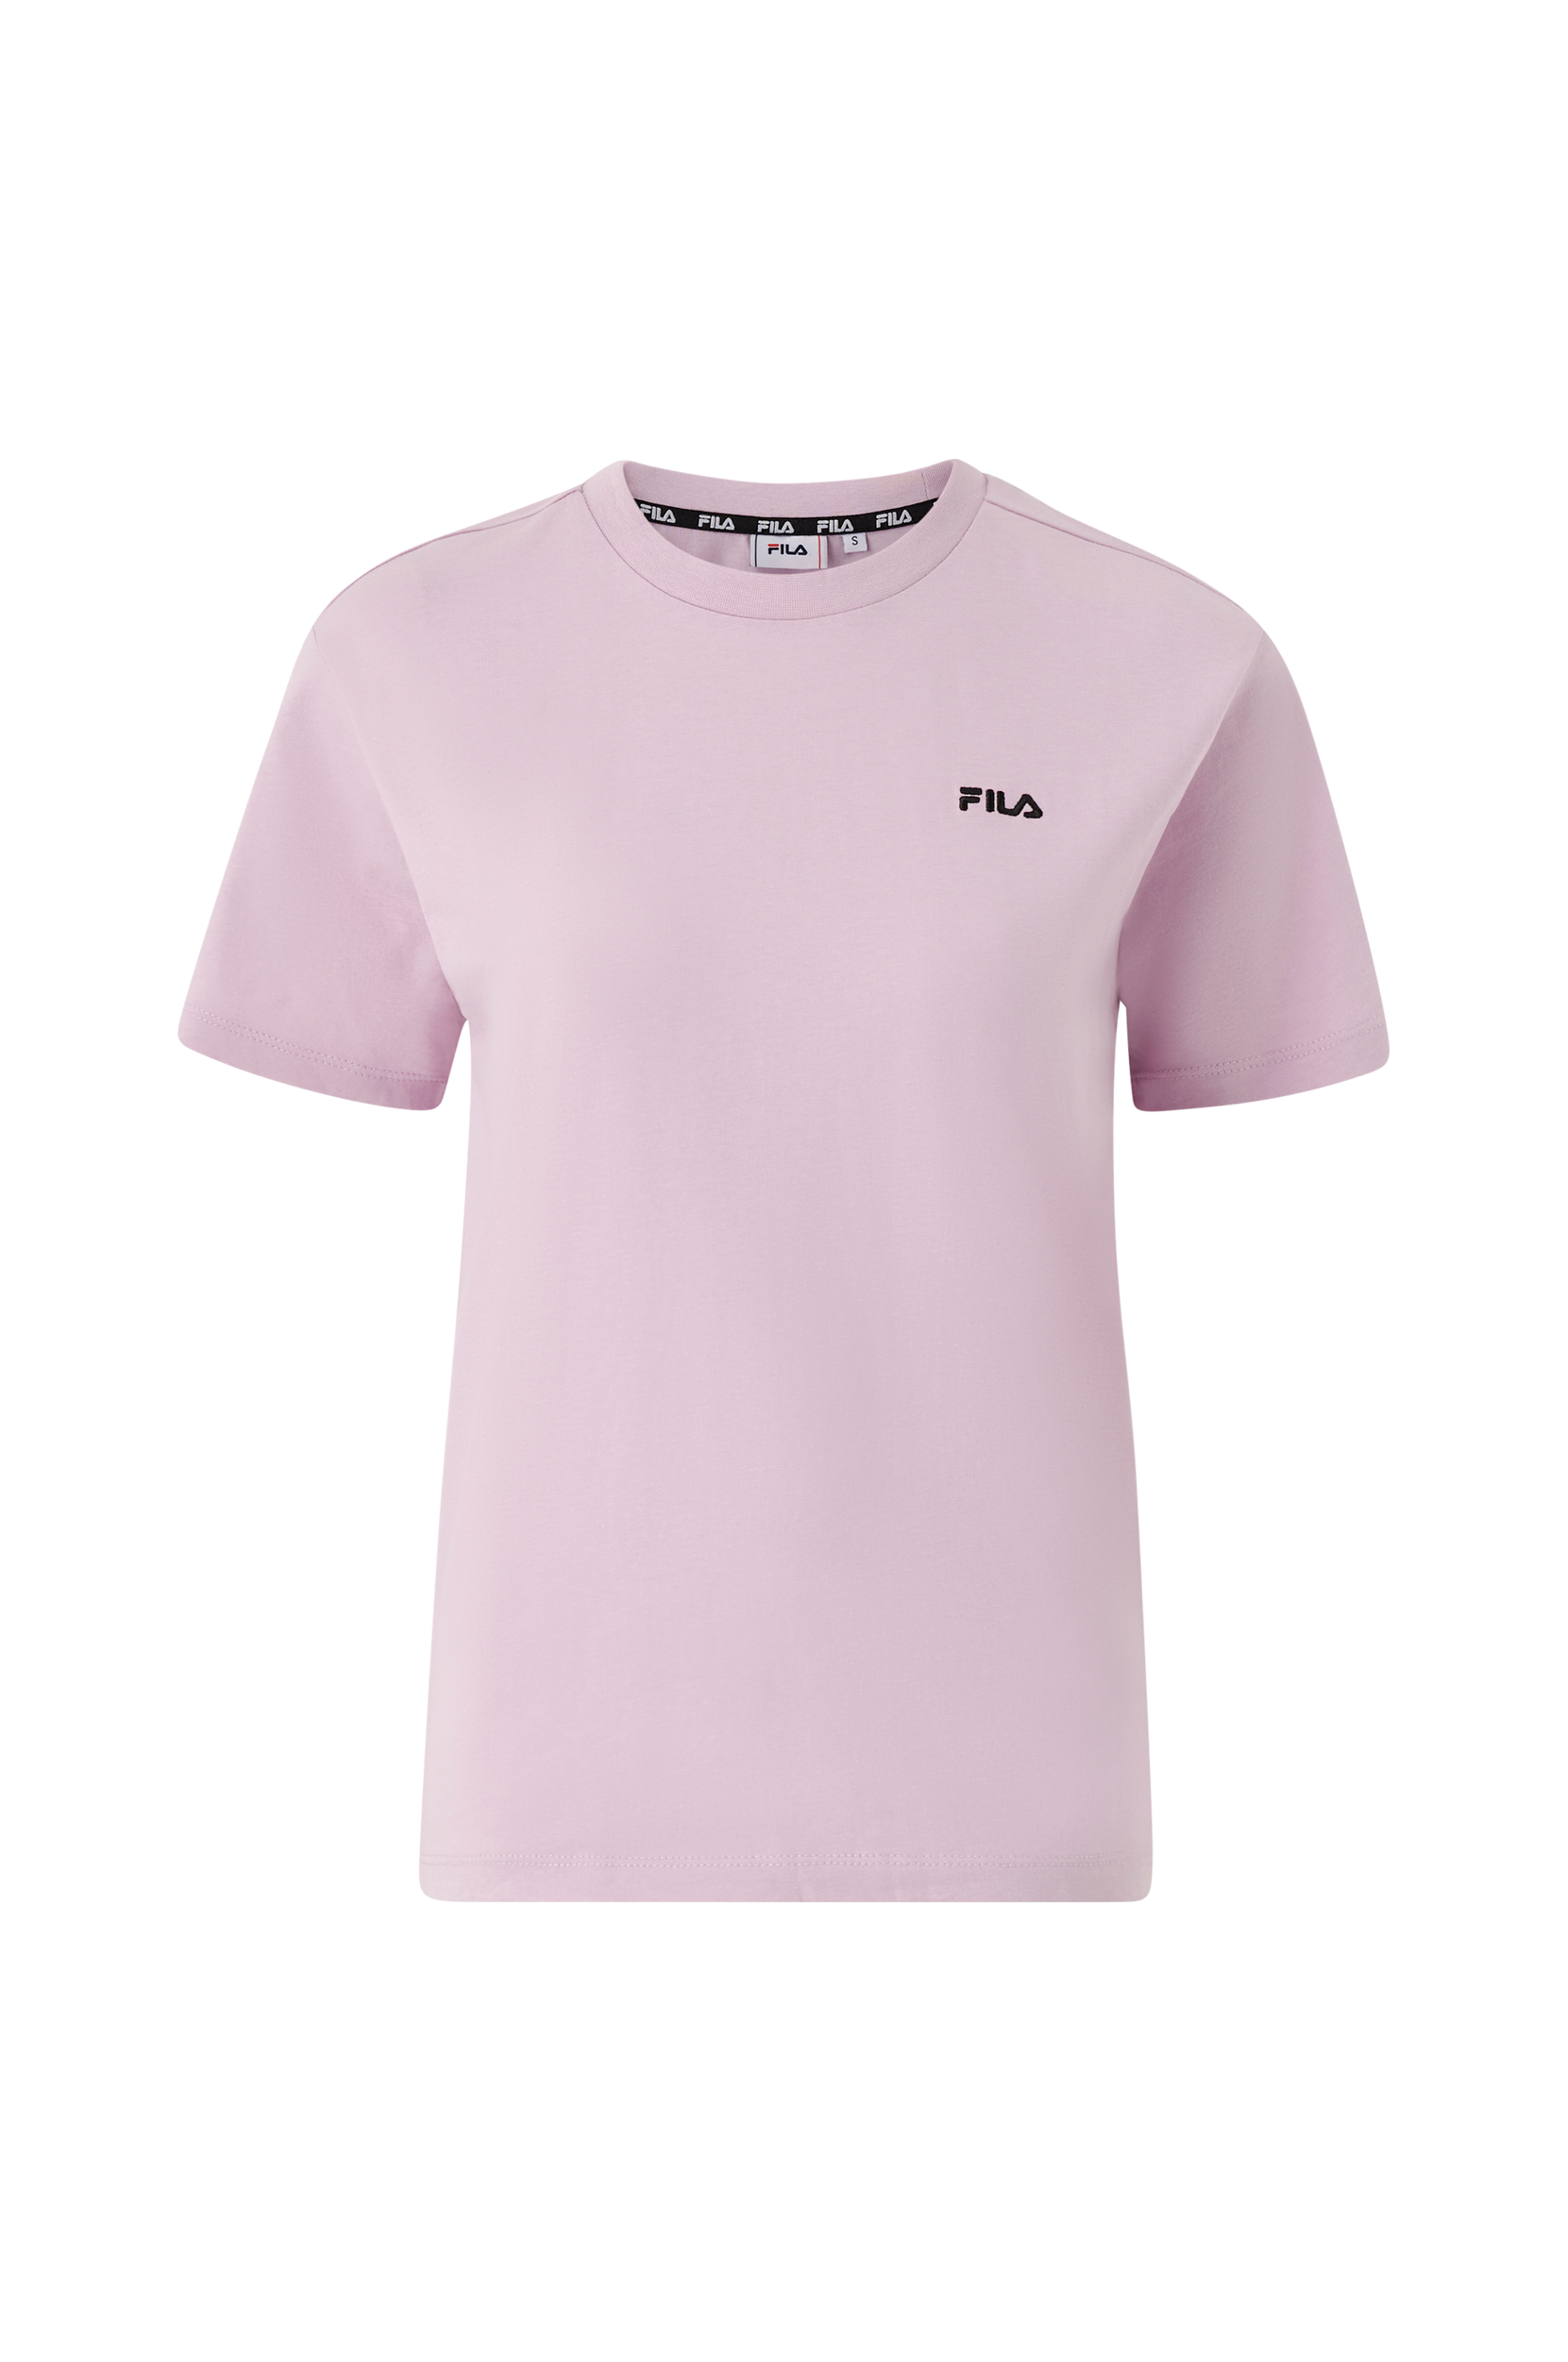 FILA - T-shirt Biendorf Tee - Lilla - 36 - Tøj til kvinder (31258784)